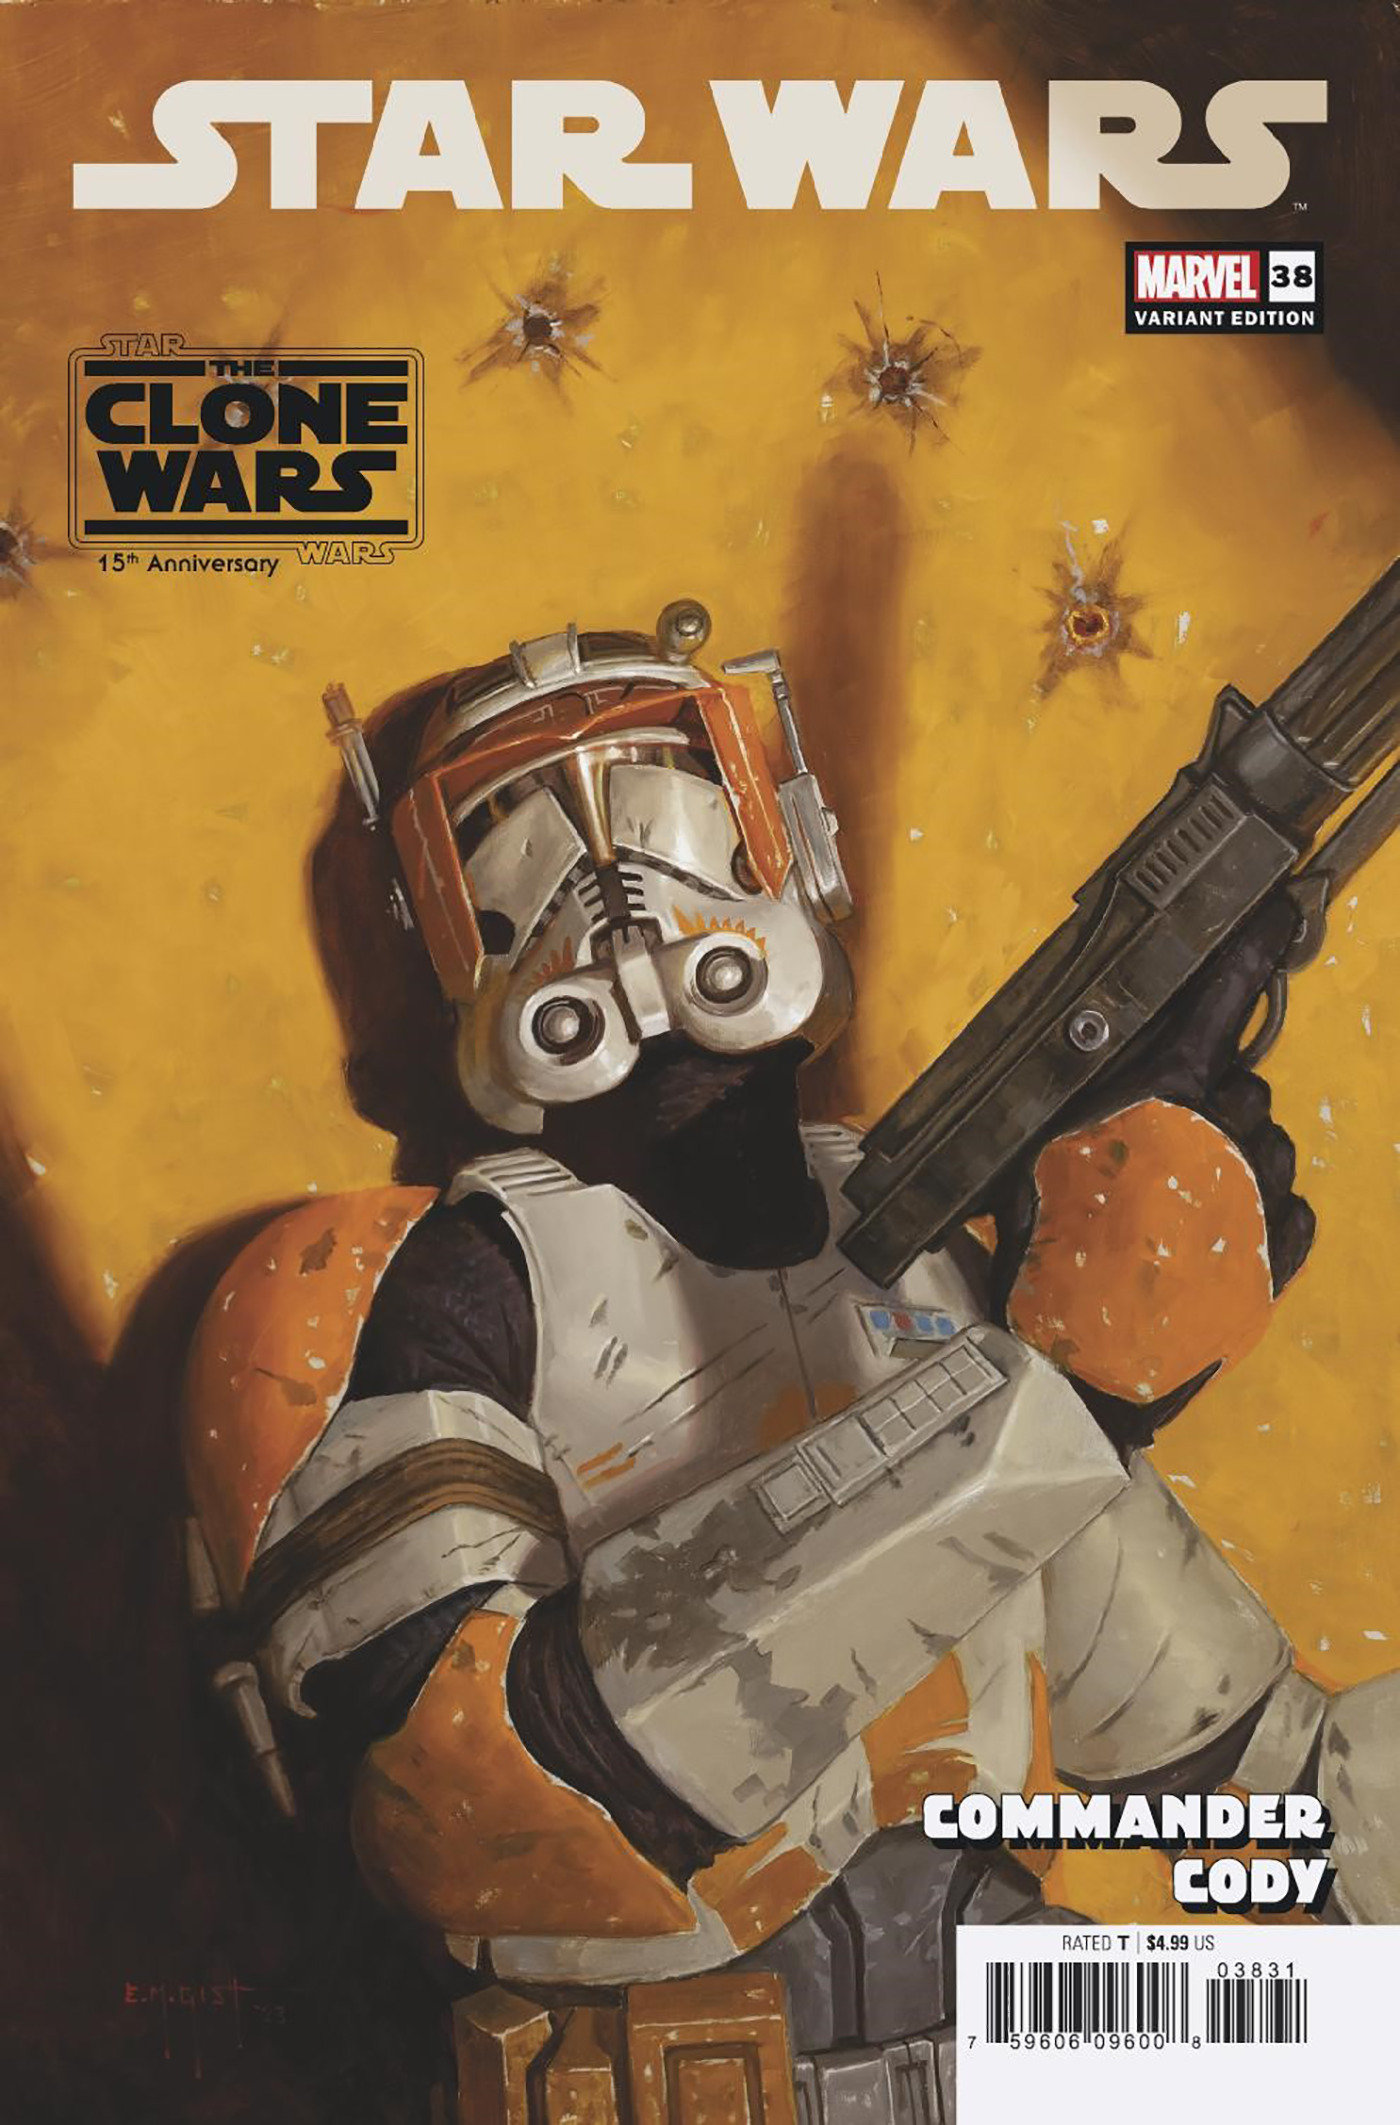 Star Wars #38 E.M. Gist Cody Star Wars: Clone Wars 15th Anniversary Variant (Dark Droids)